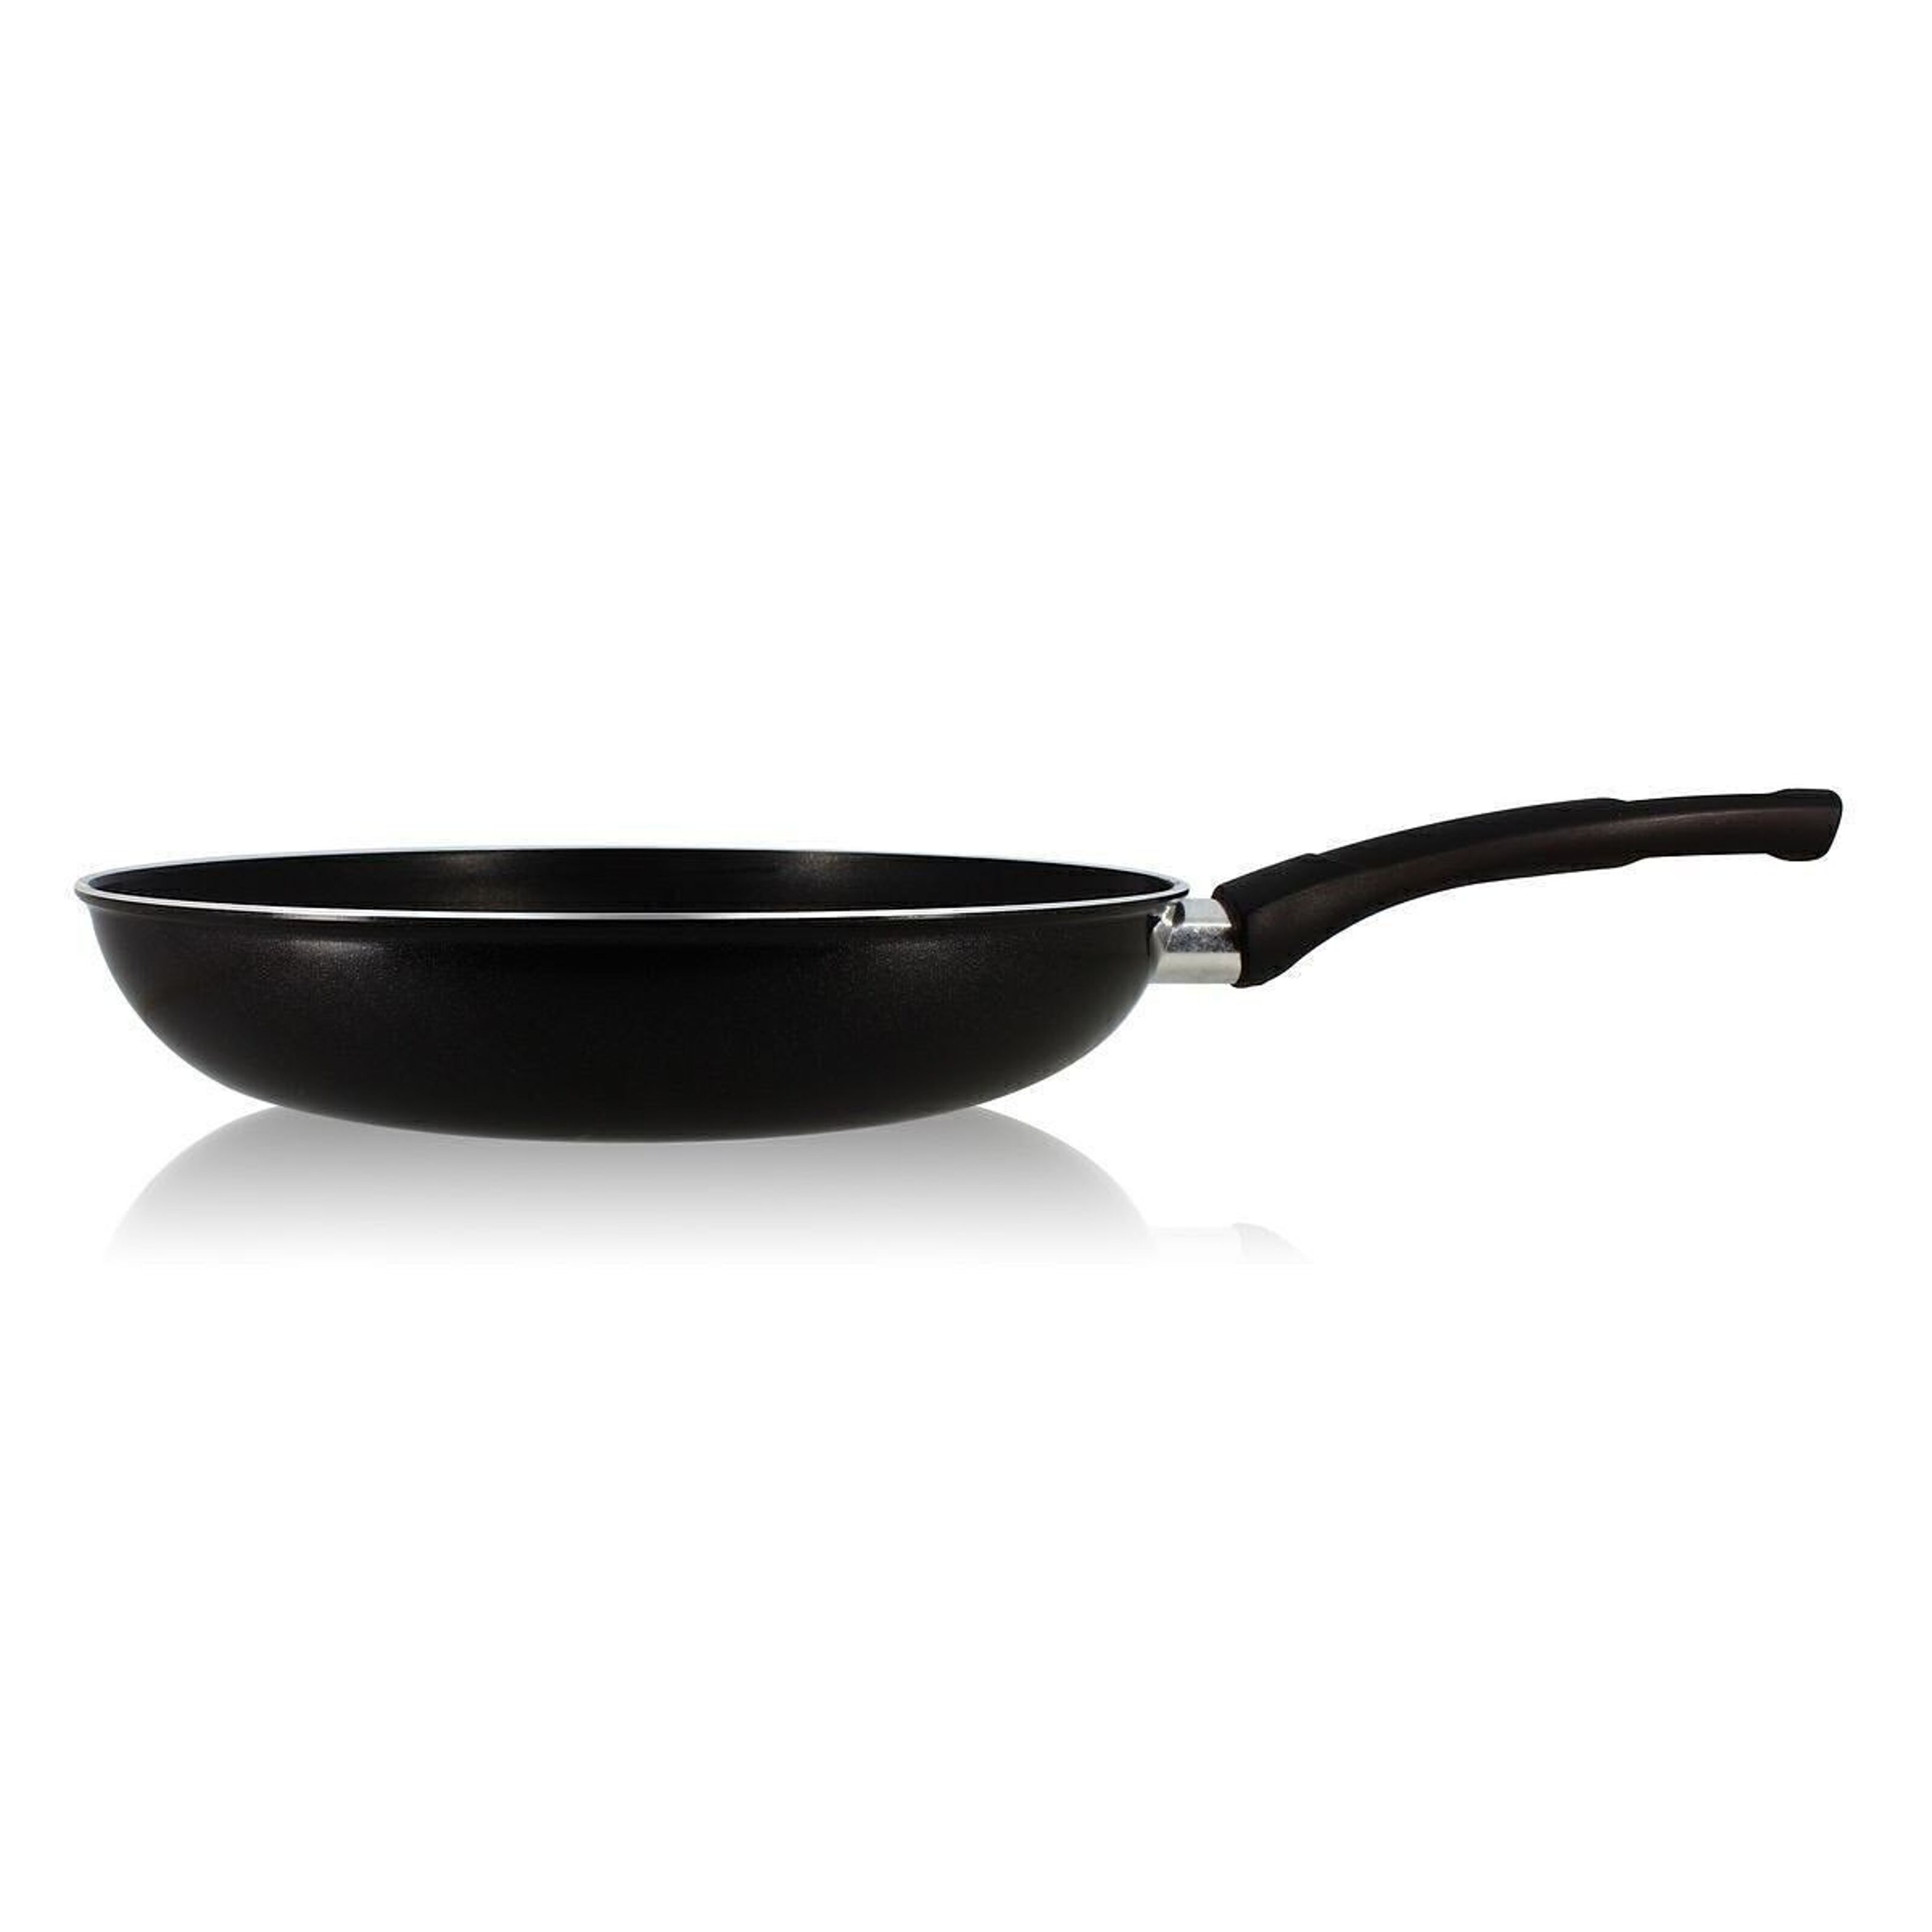 STONELINE® poêle wok 30 cm - Made in Germany, poignée amovible